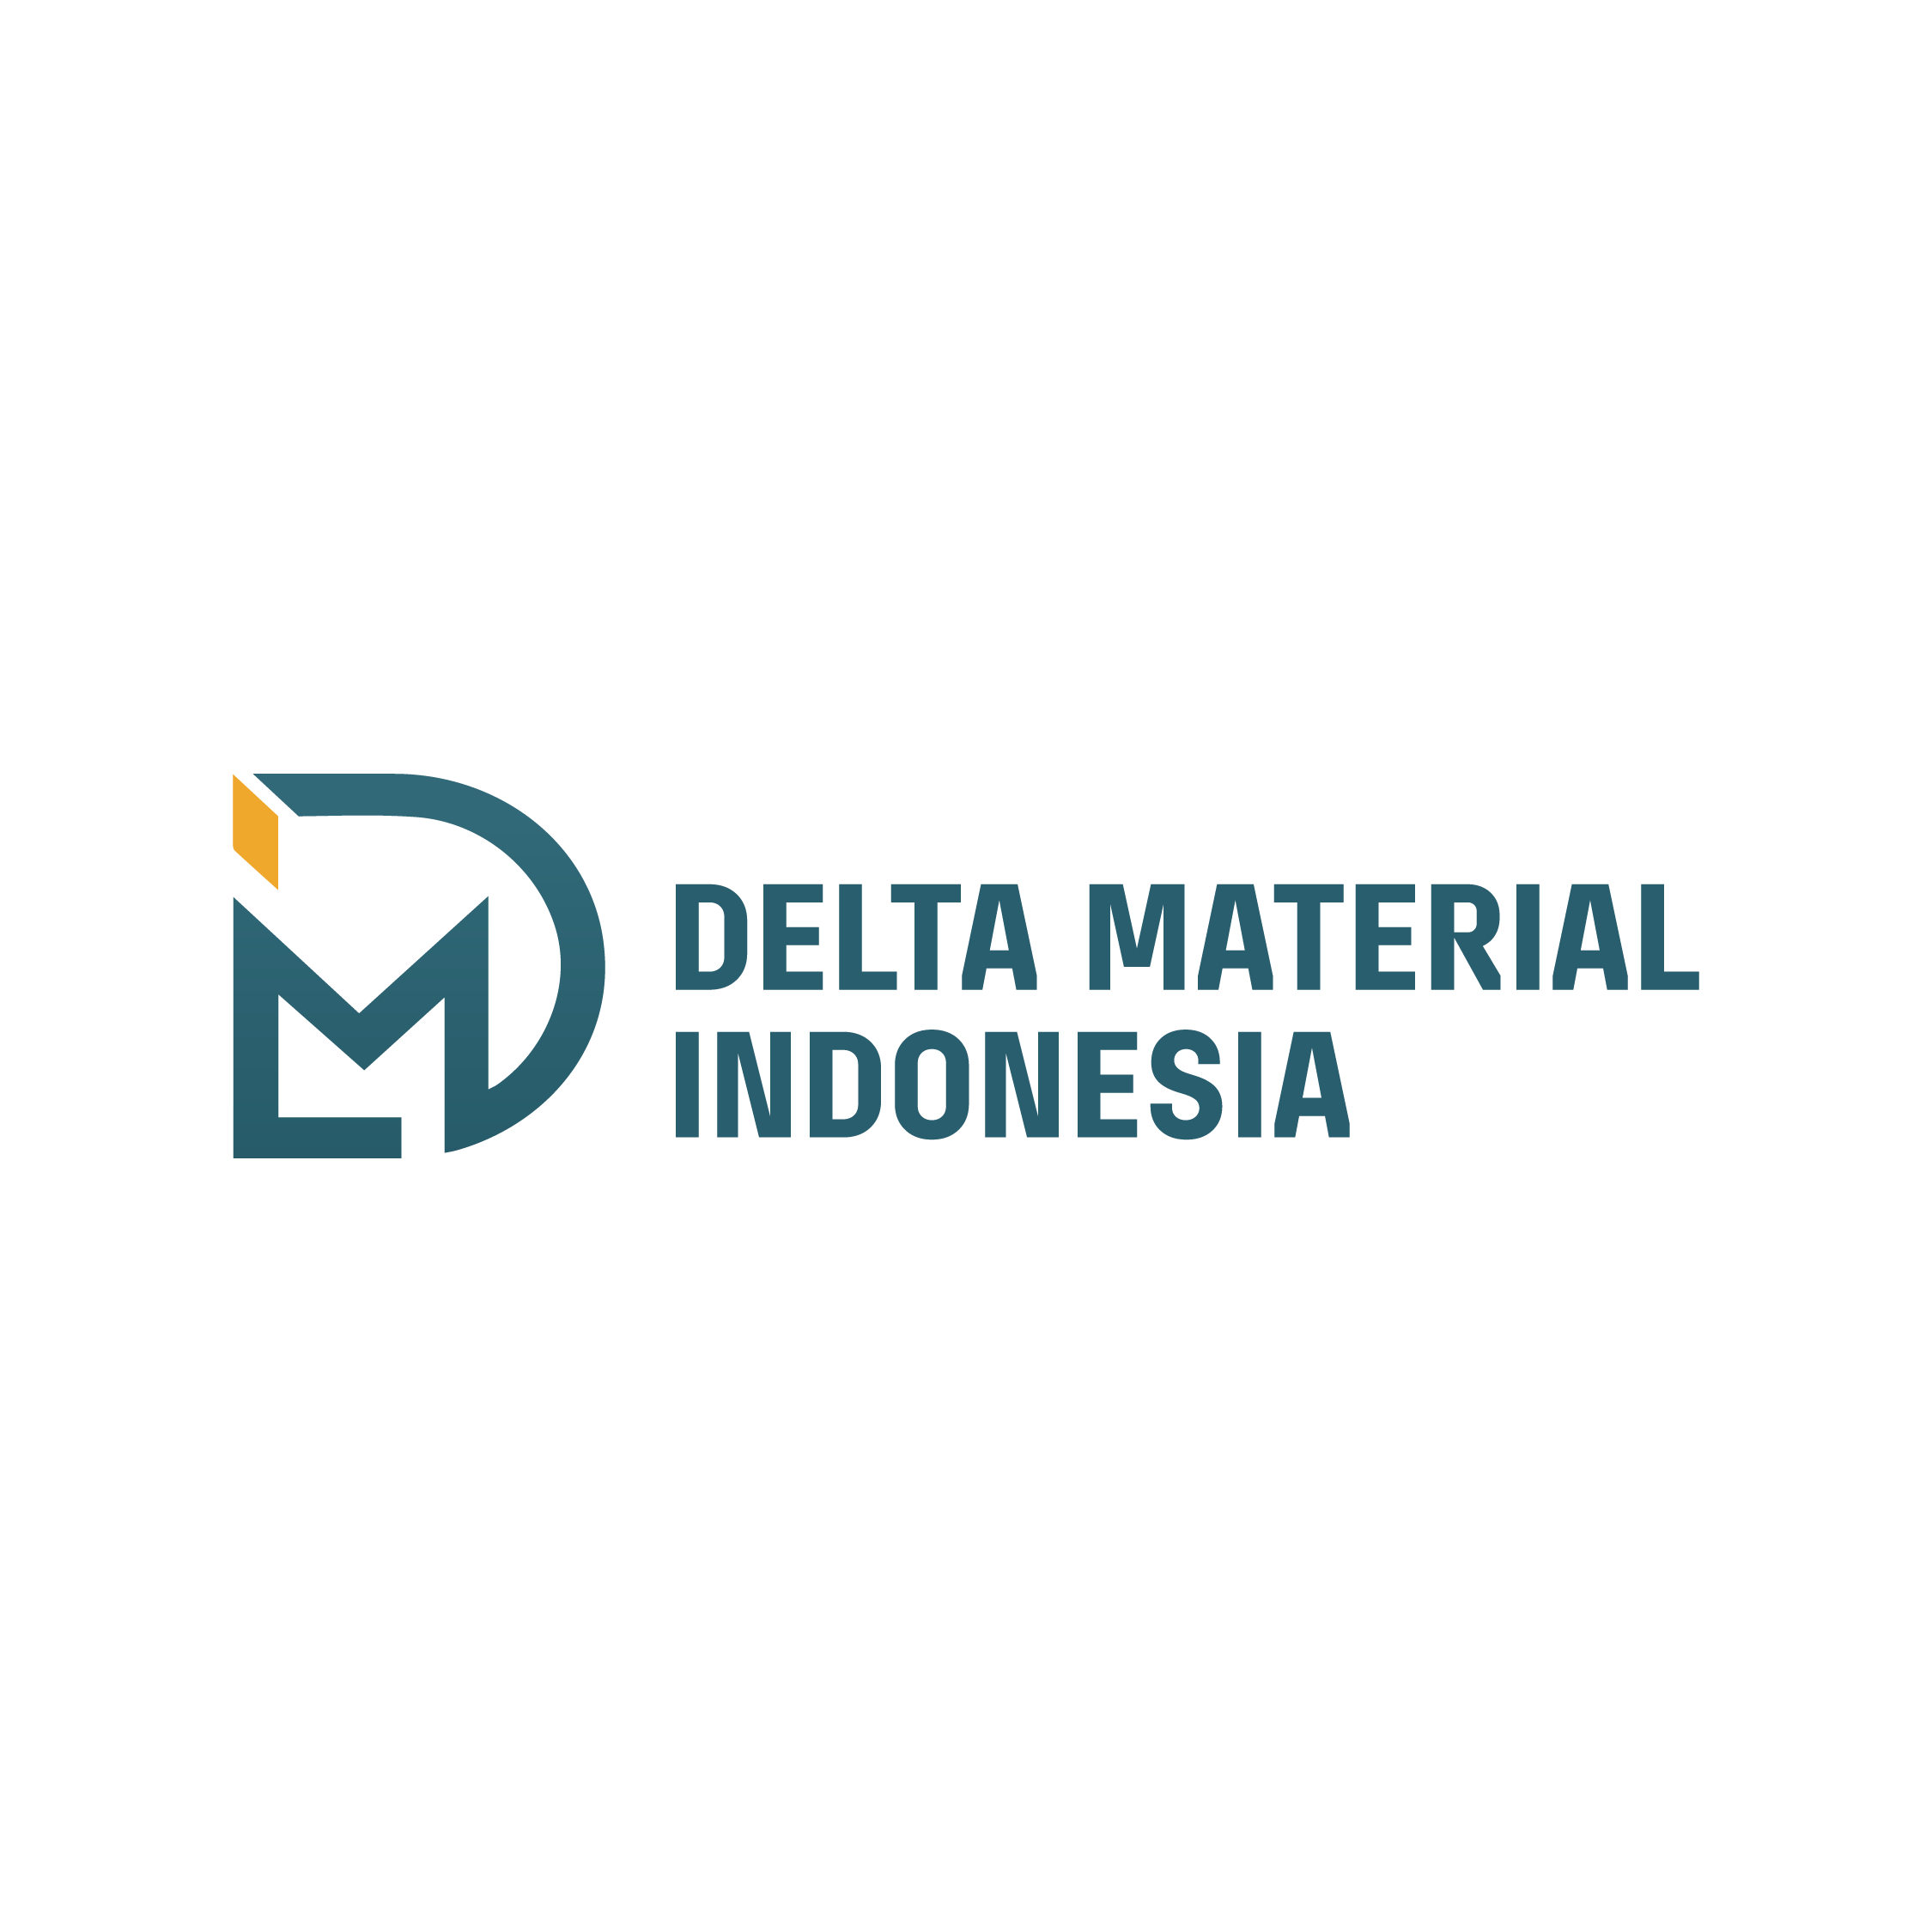 Delta Material